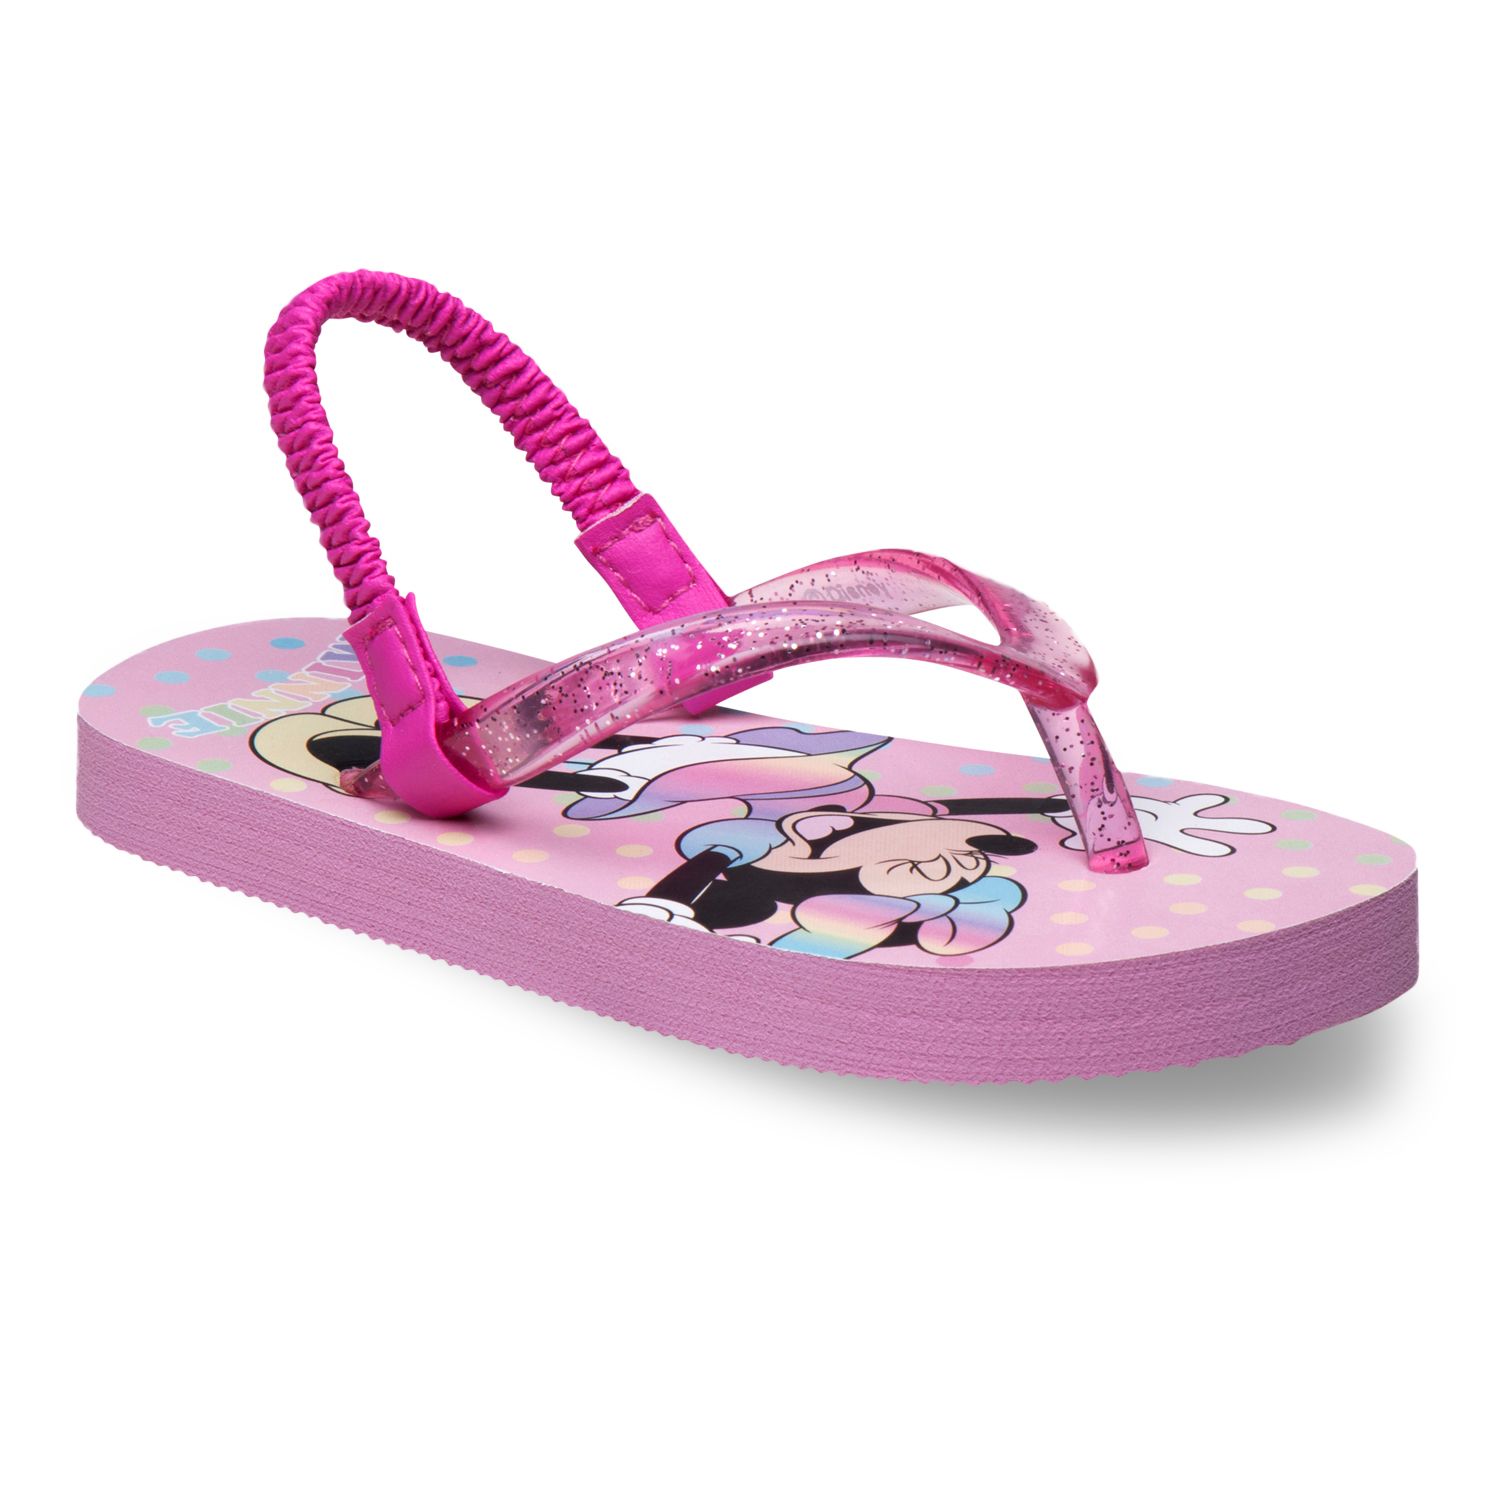 Image for Disney 's Minnie Mouse Toddler Girls' Flip Flop Sandals at Kohl's.